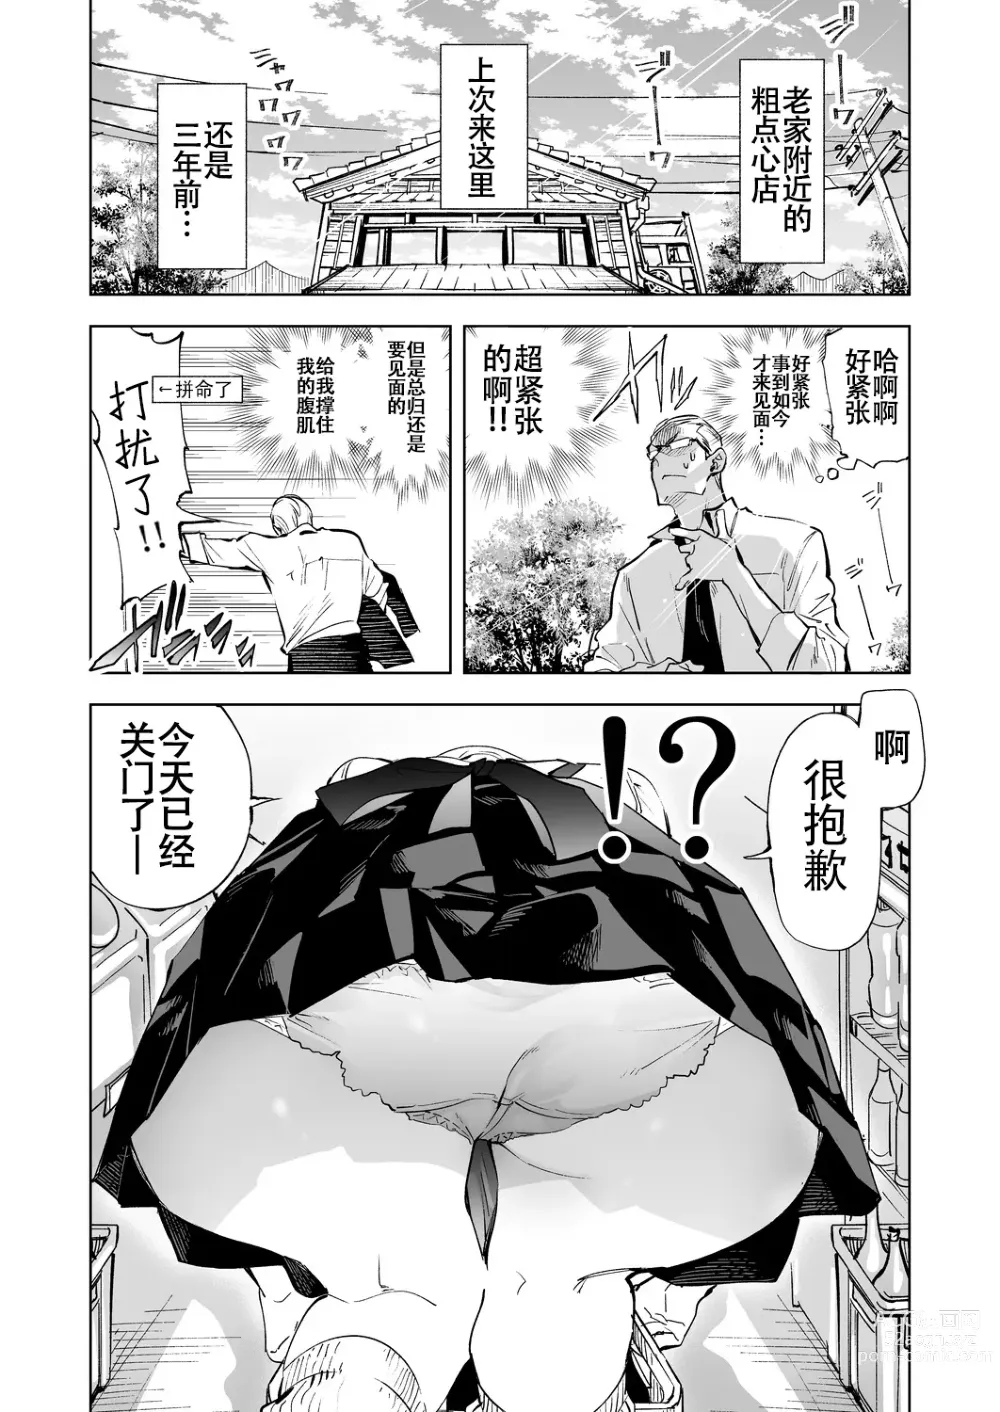 Page 5 of doujinshi 2haku 3ka no Hanayome 3 years after